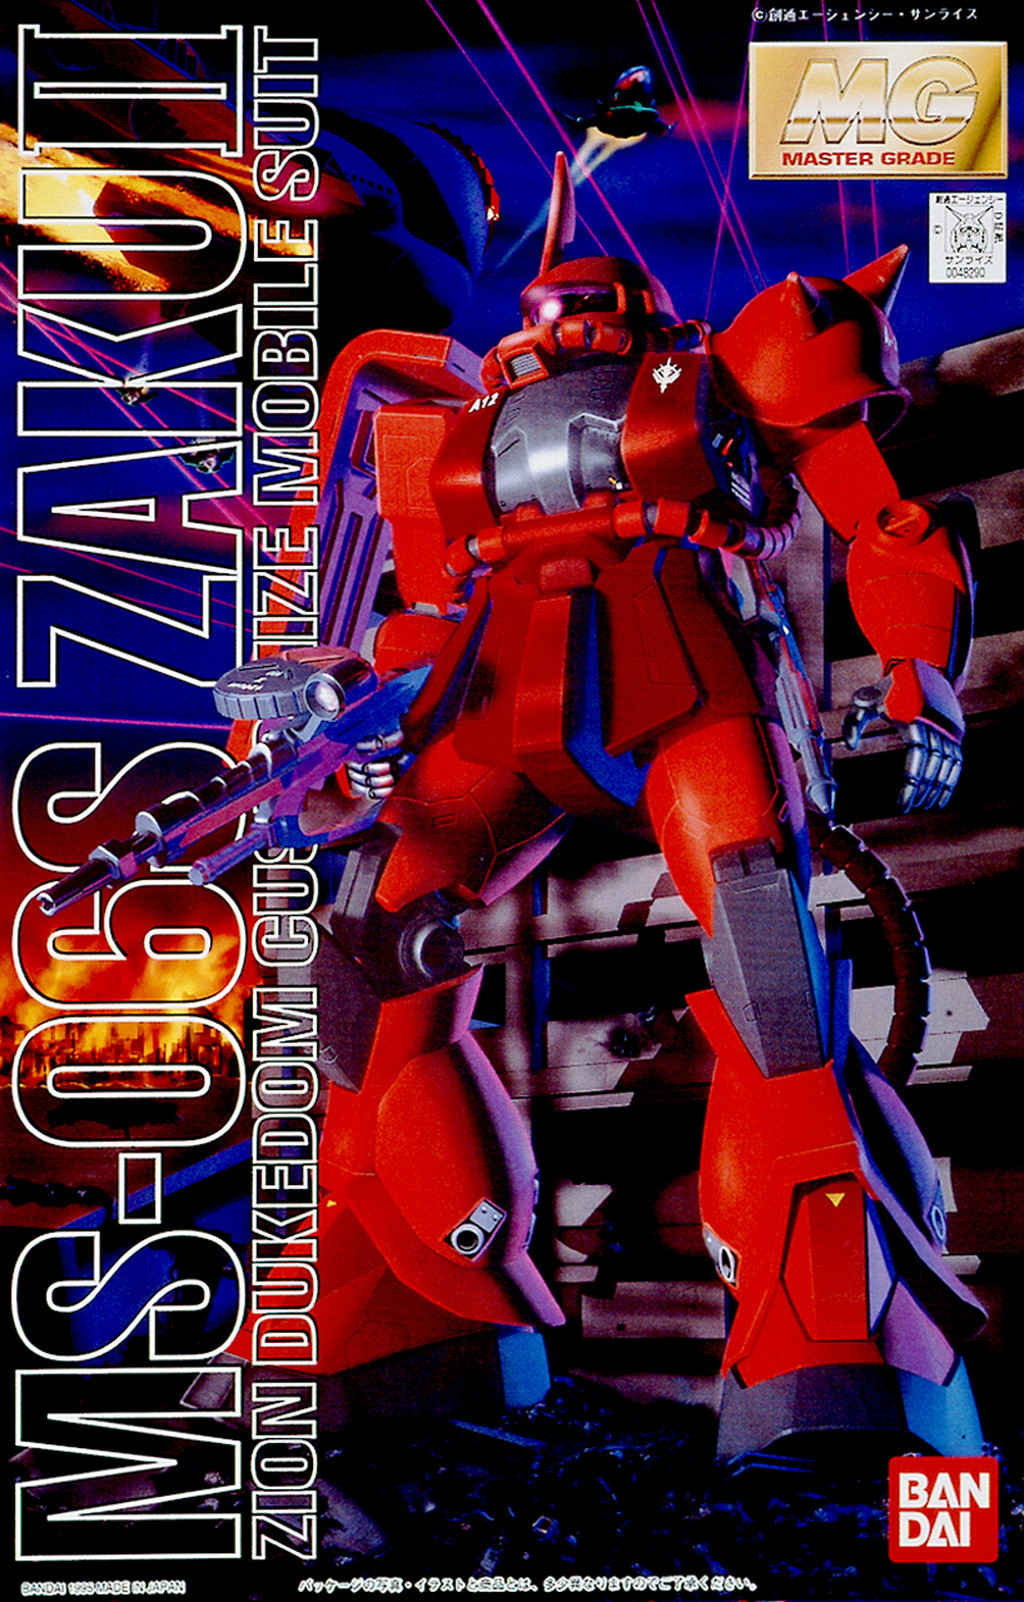 Detail upgrade parts For Bandai MG ZAKU MS-06S Gundam 1/100 scale model kit 